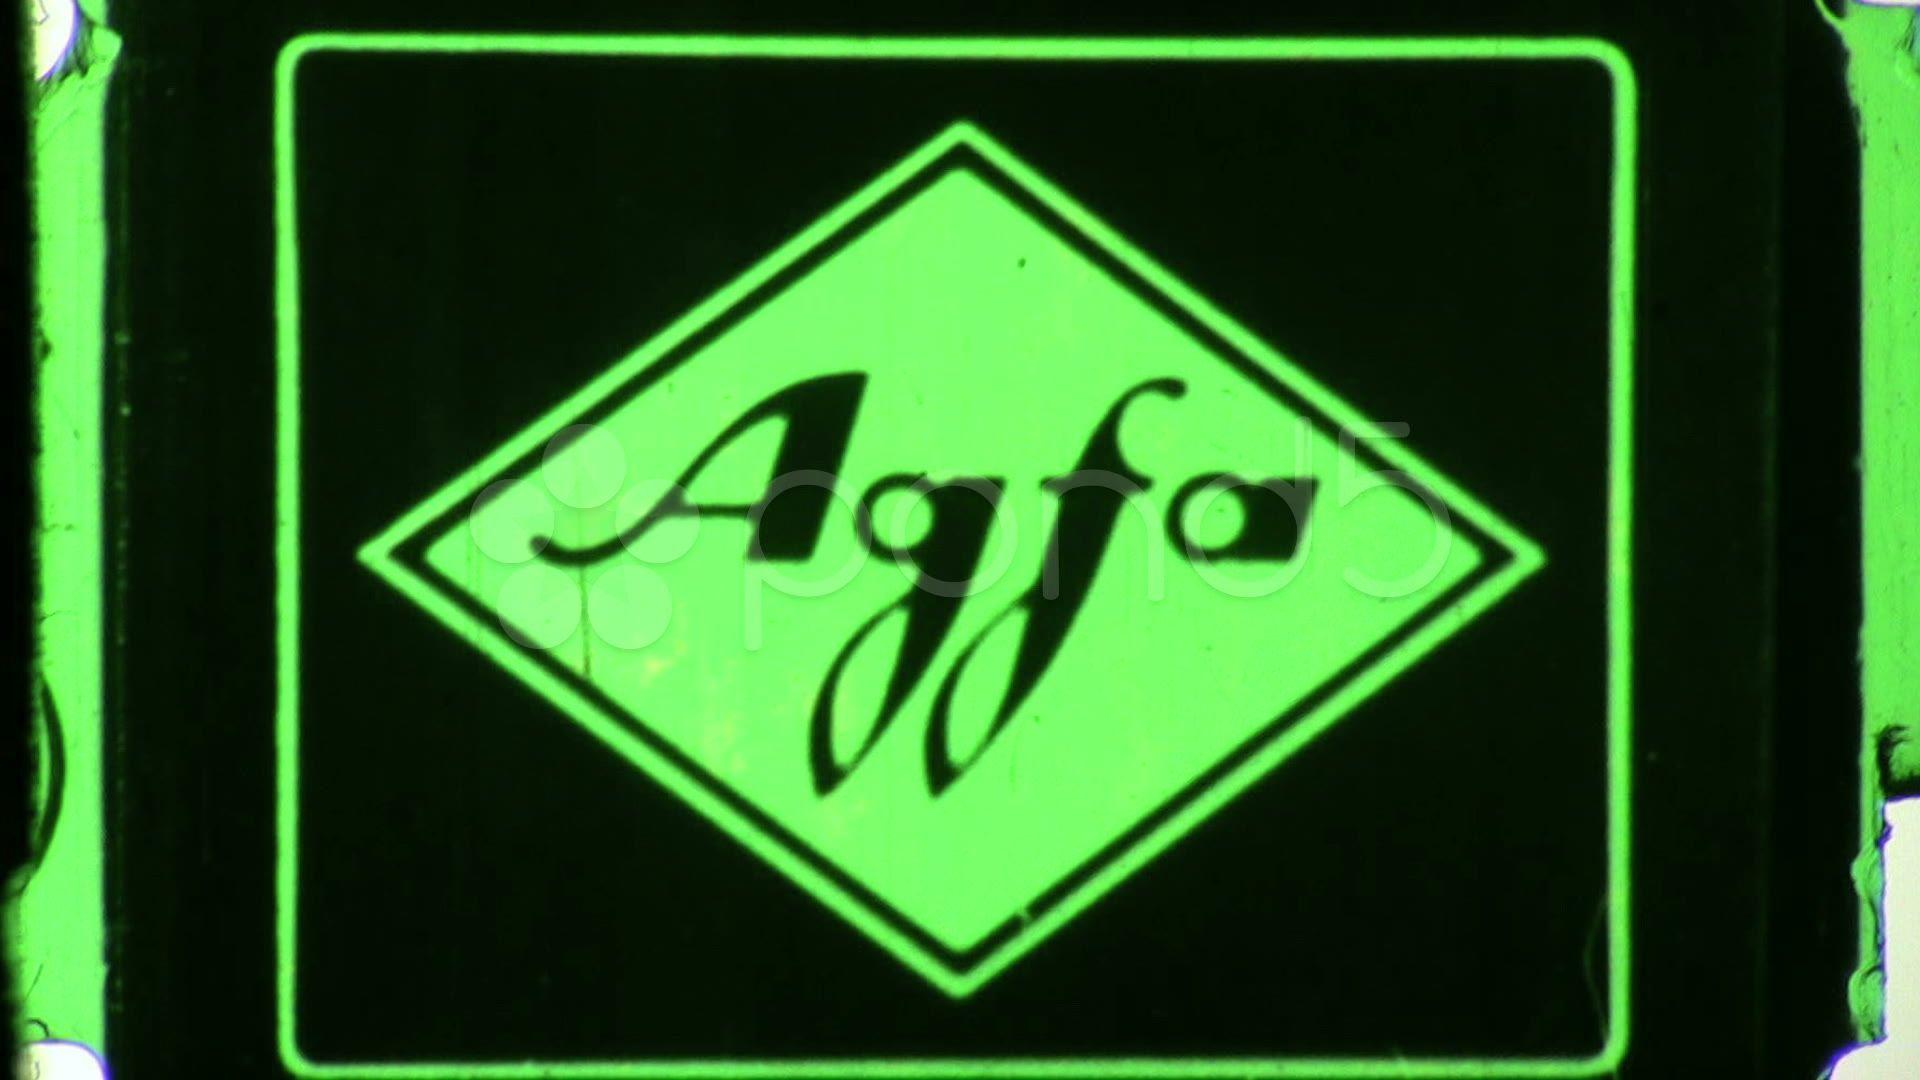 Agfa Logo - AGFA Corporate Film Processing LOGO Vintage Film Home Movie Leader